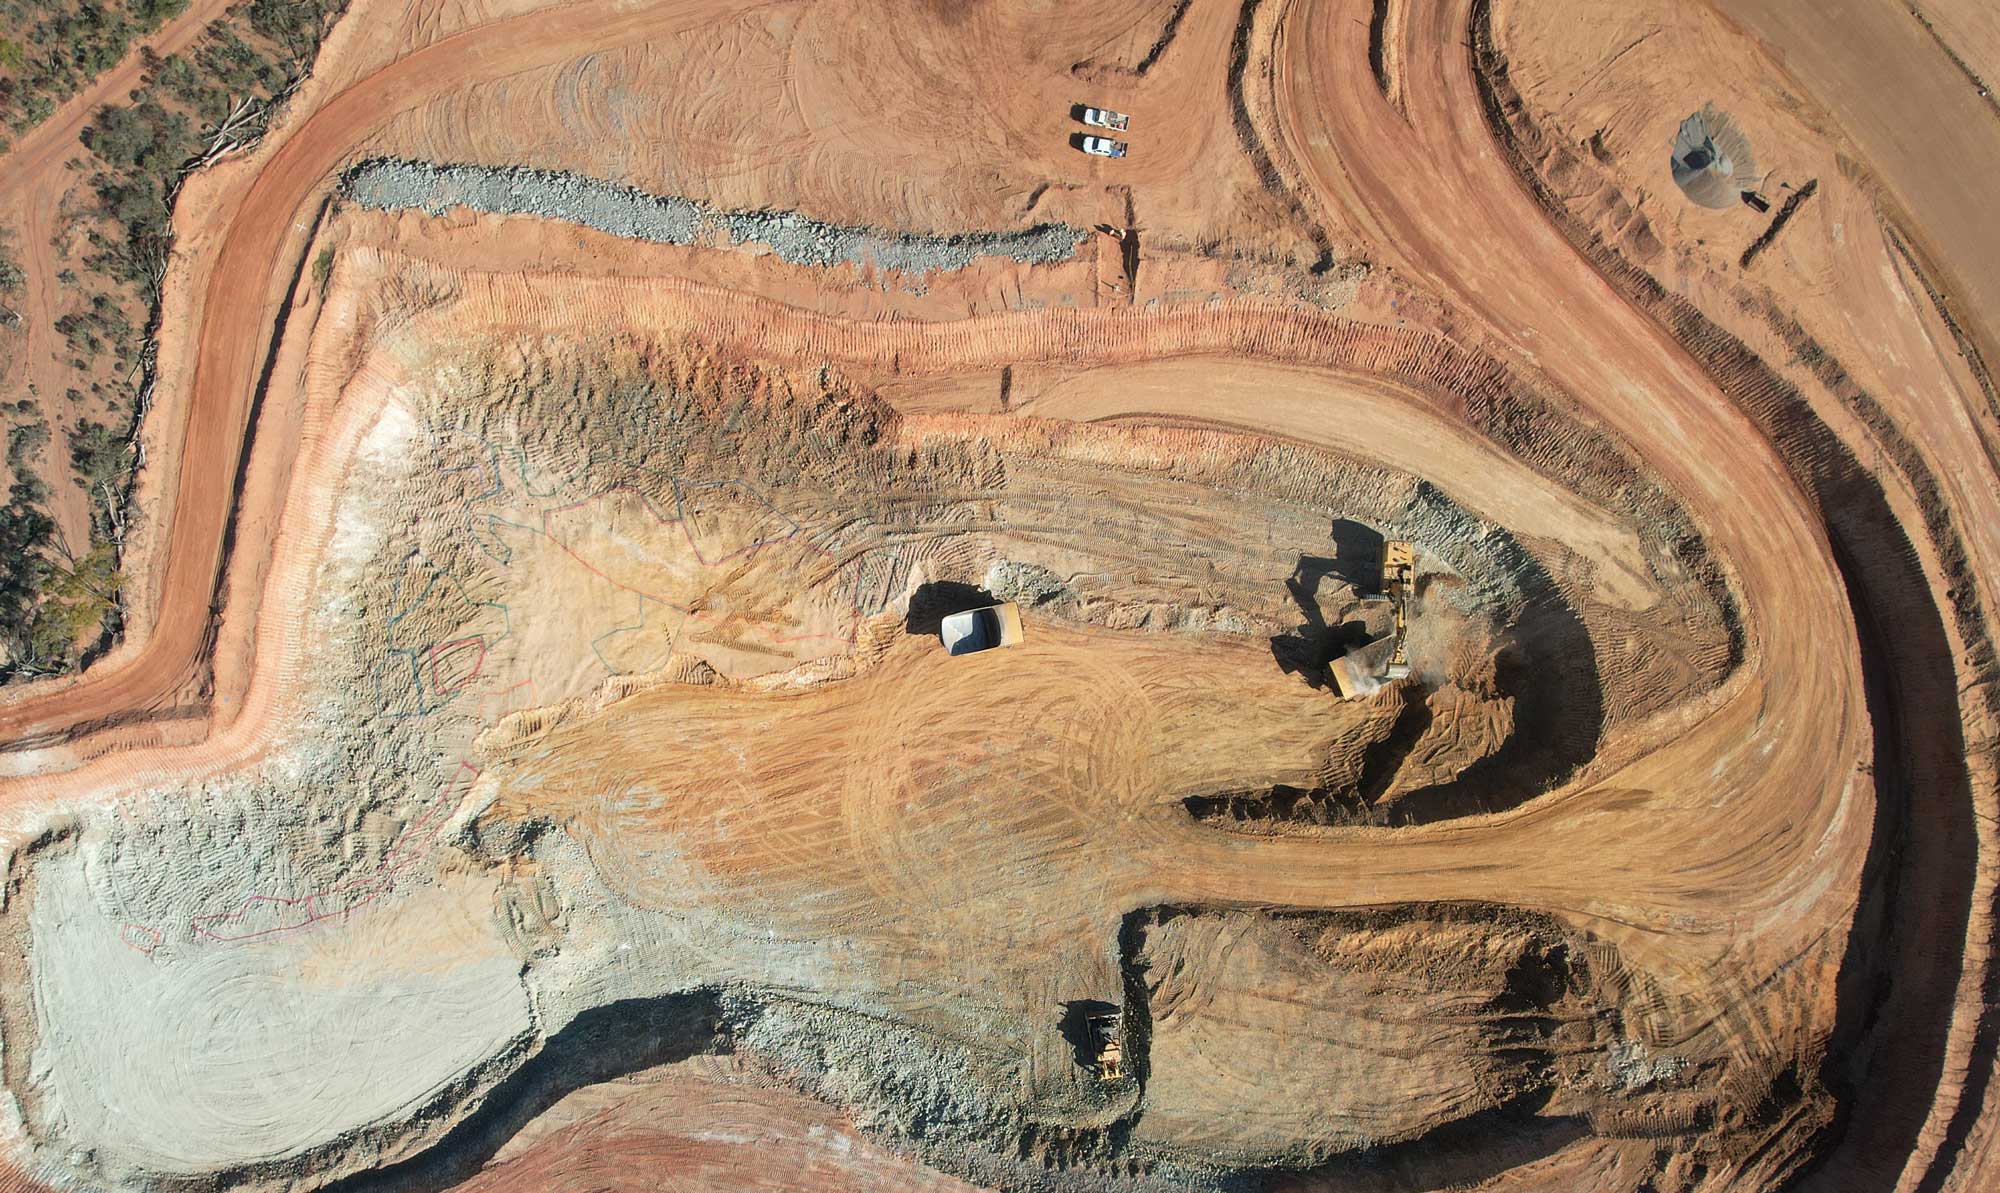 Birds-eye-view drone shot of an open-pit mine.